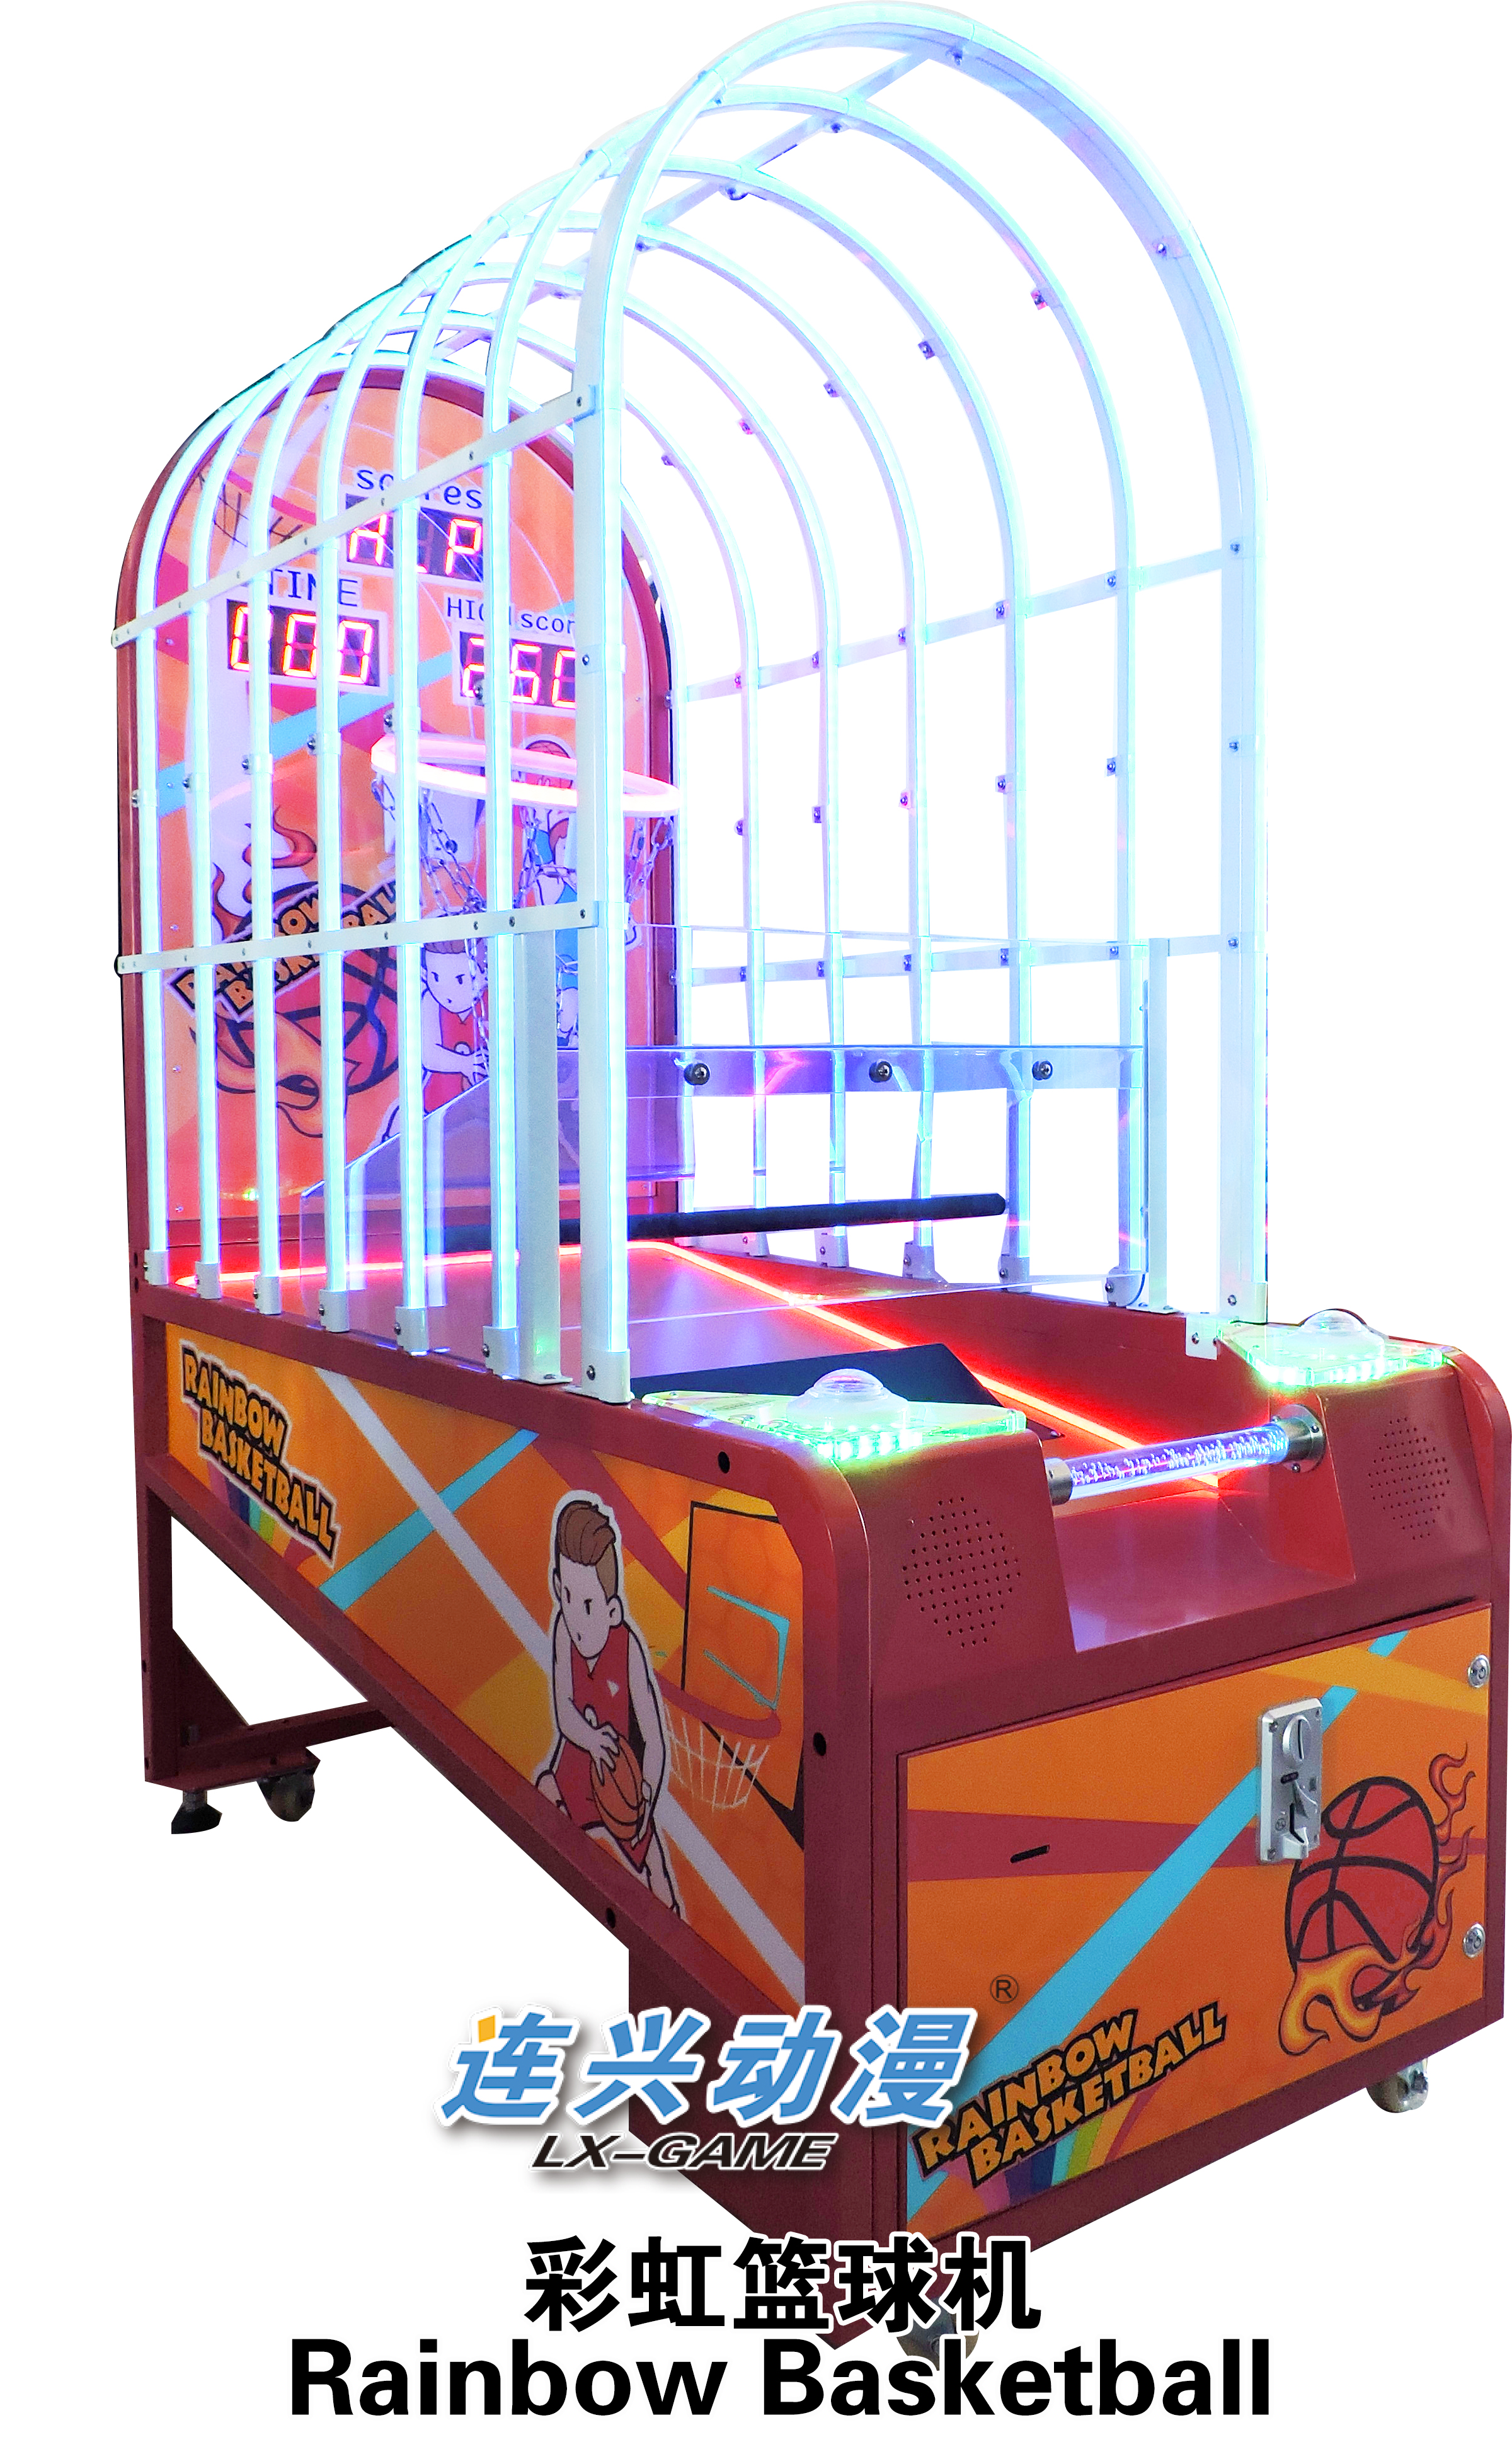 LX-Game Amusement Machine Co.,Ltd